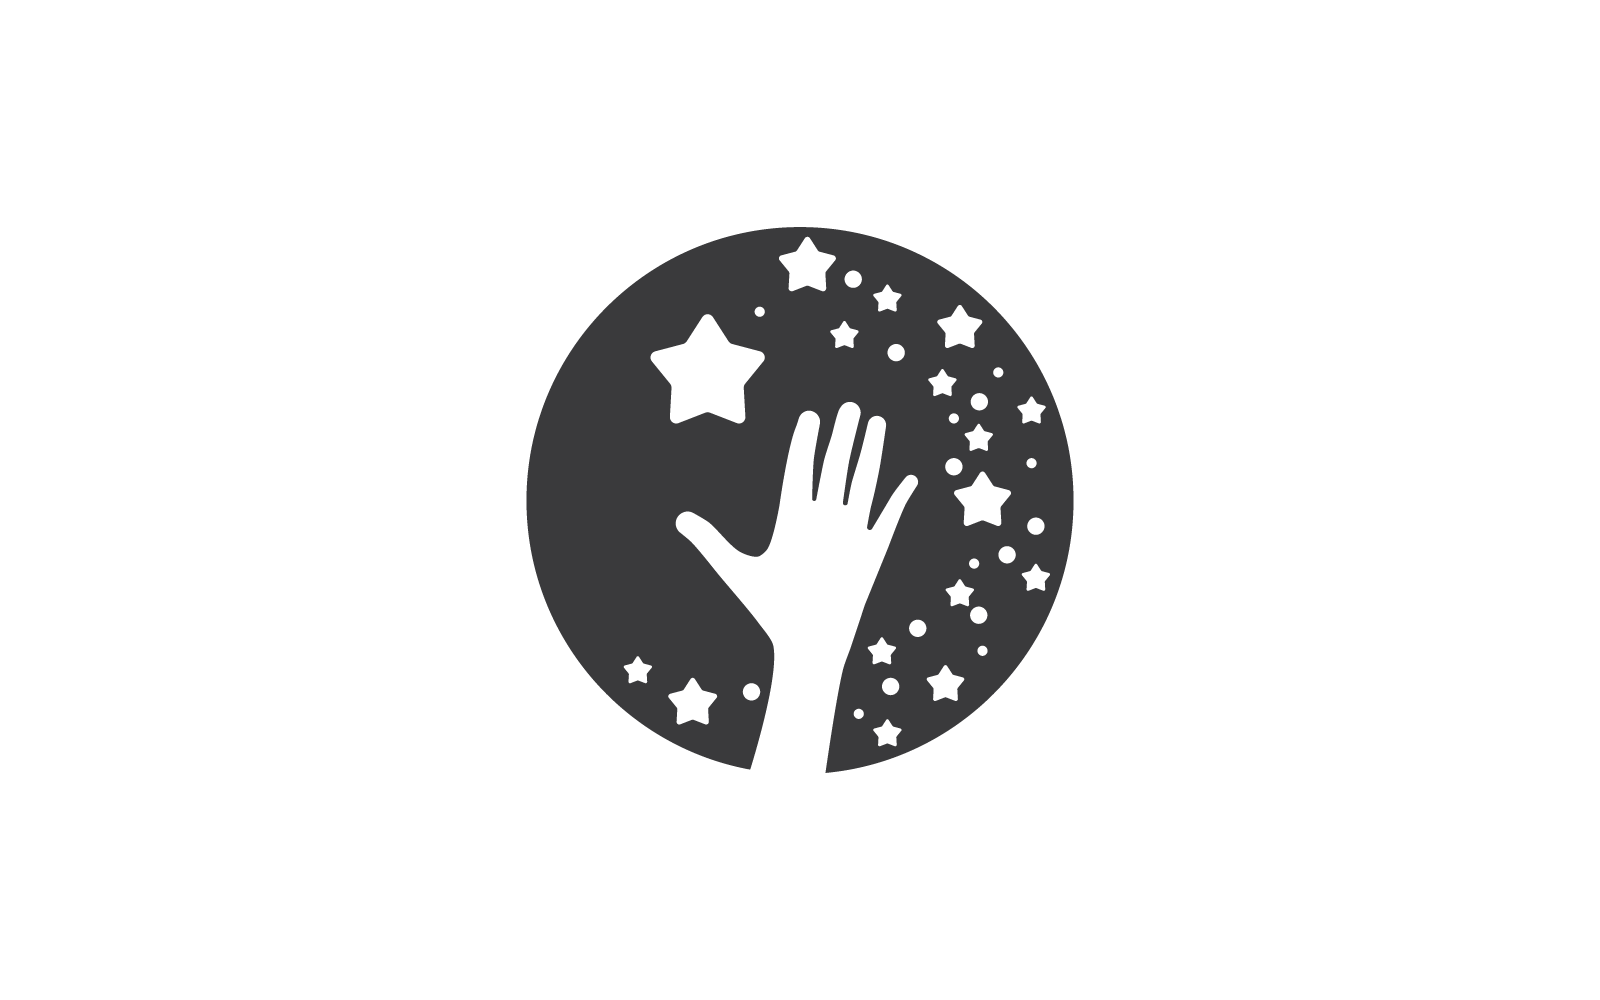 Dreams star design illustration logo template